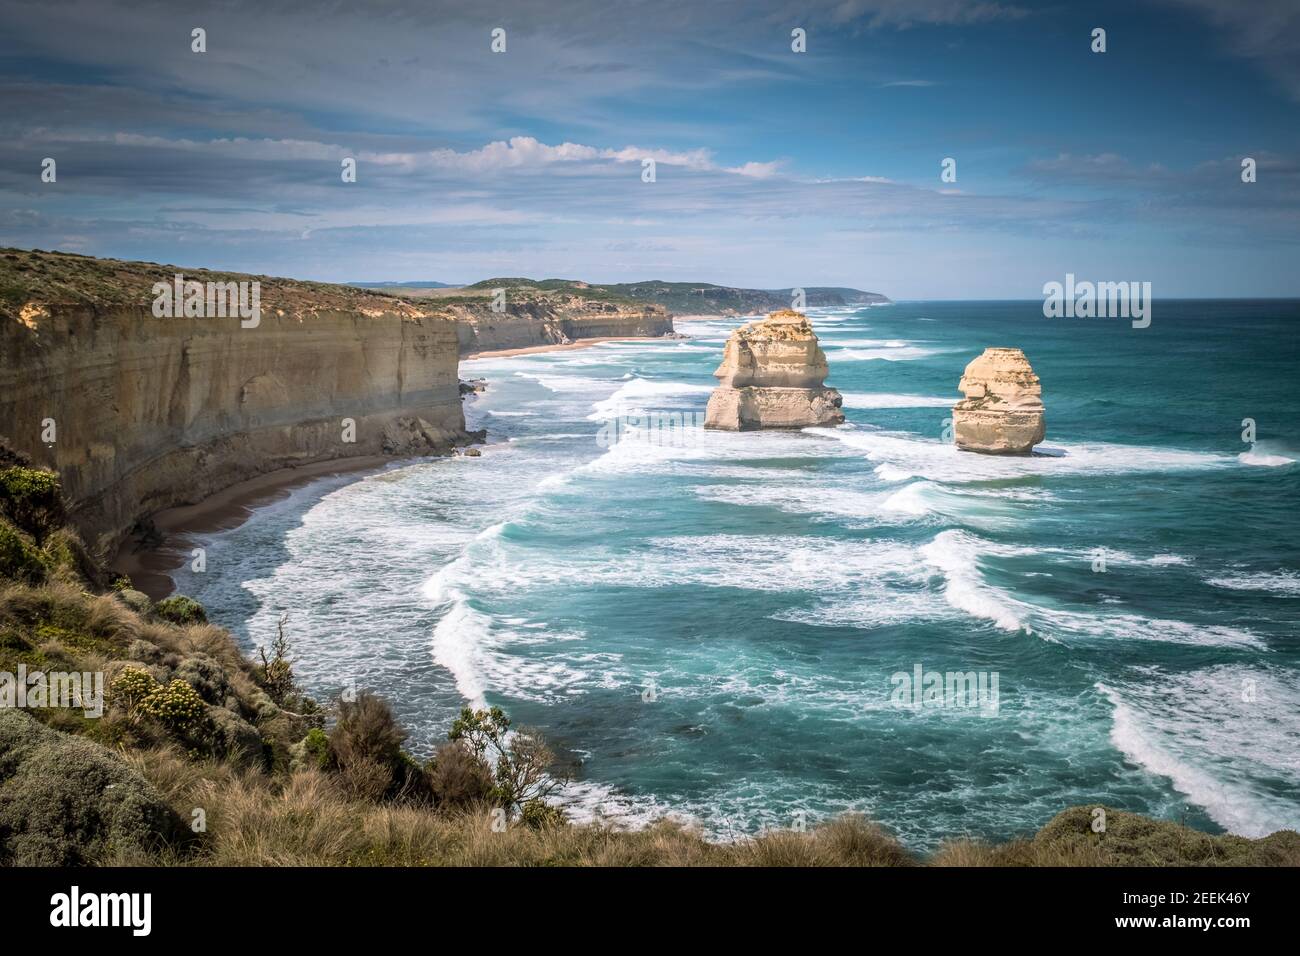 The 'Twelve Apostles' on Australia's Great Ocean Road Stock Photo